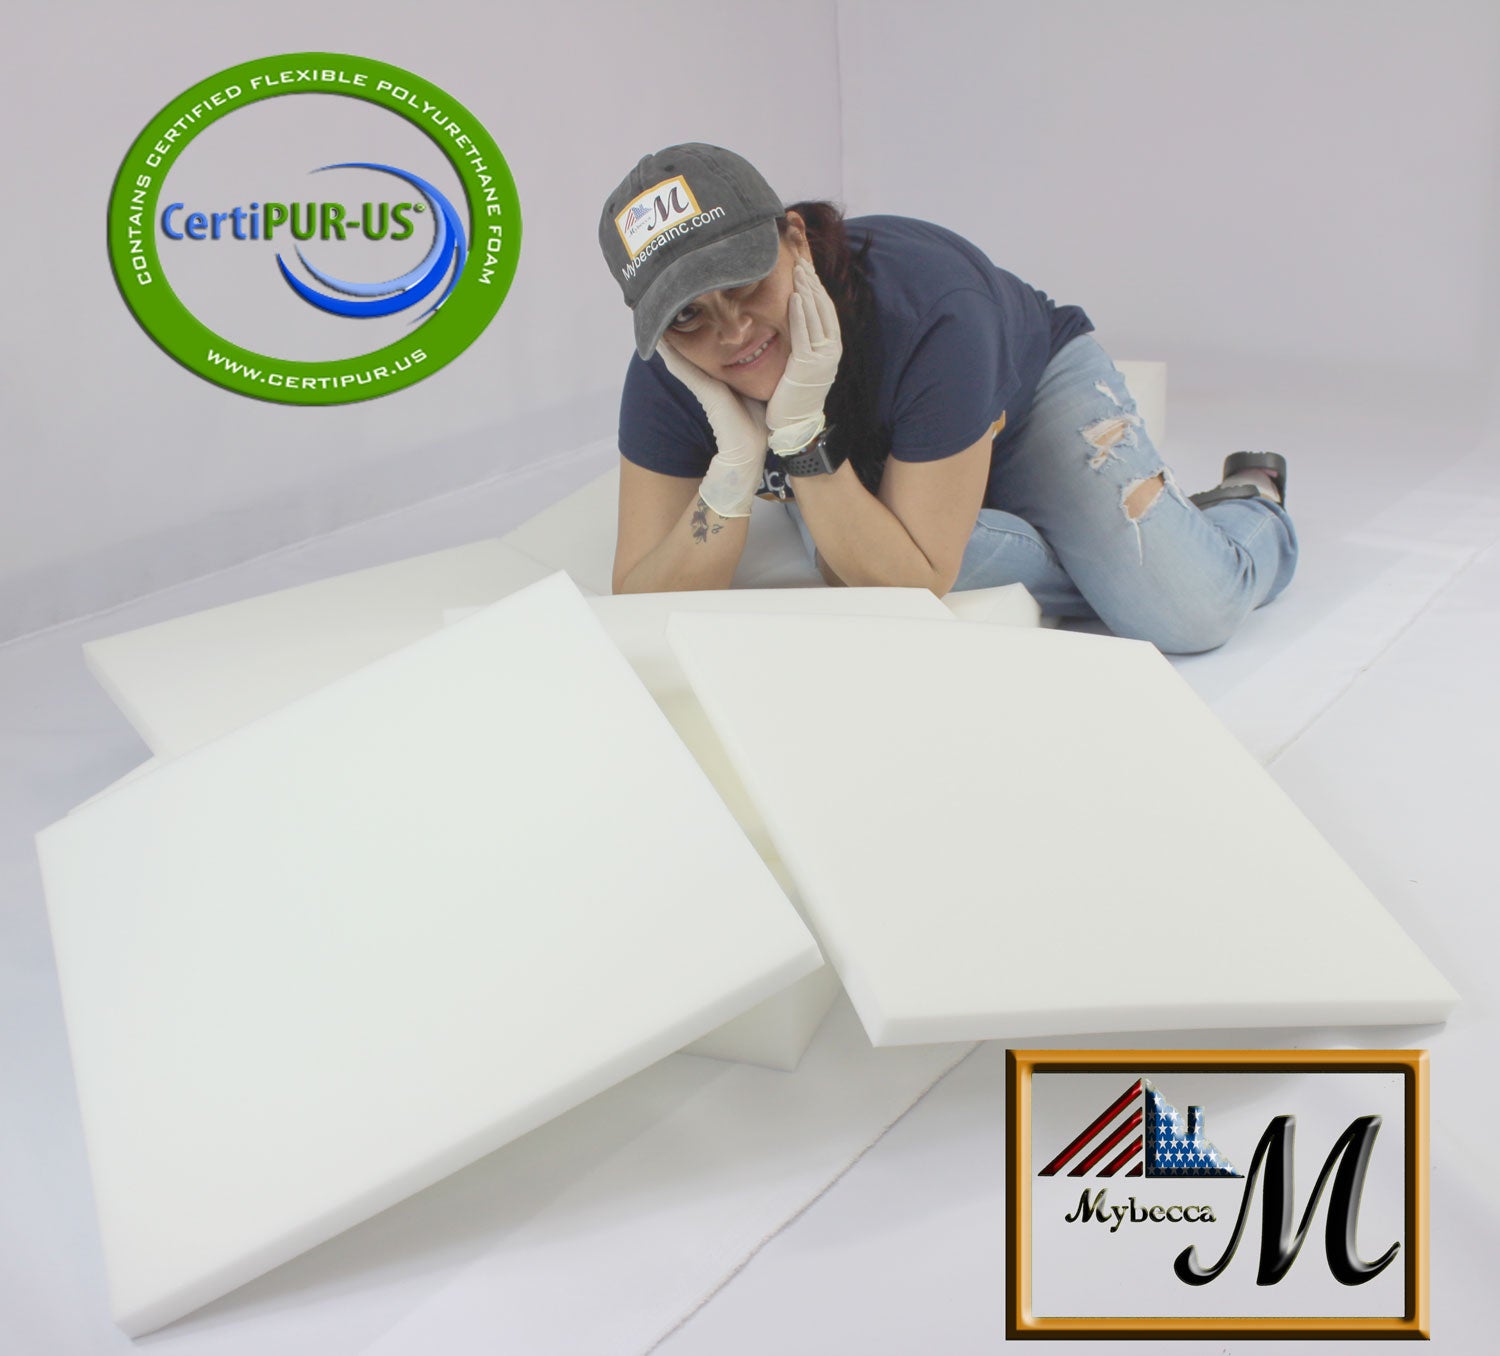 Upholstery Foam 6 Thick, 30 Wide x 72 Long Medium Density